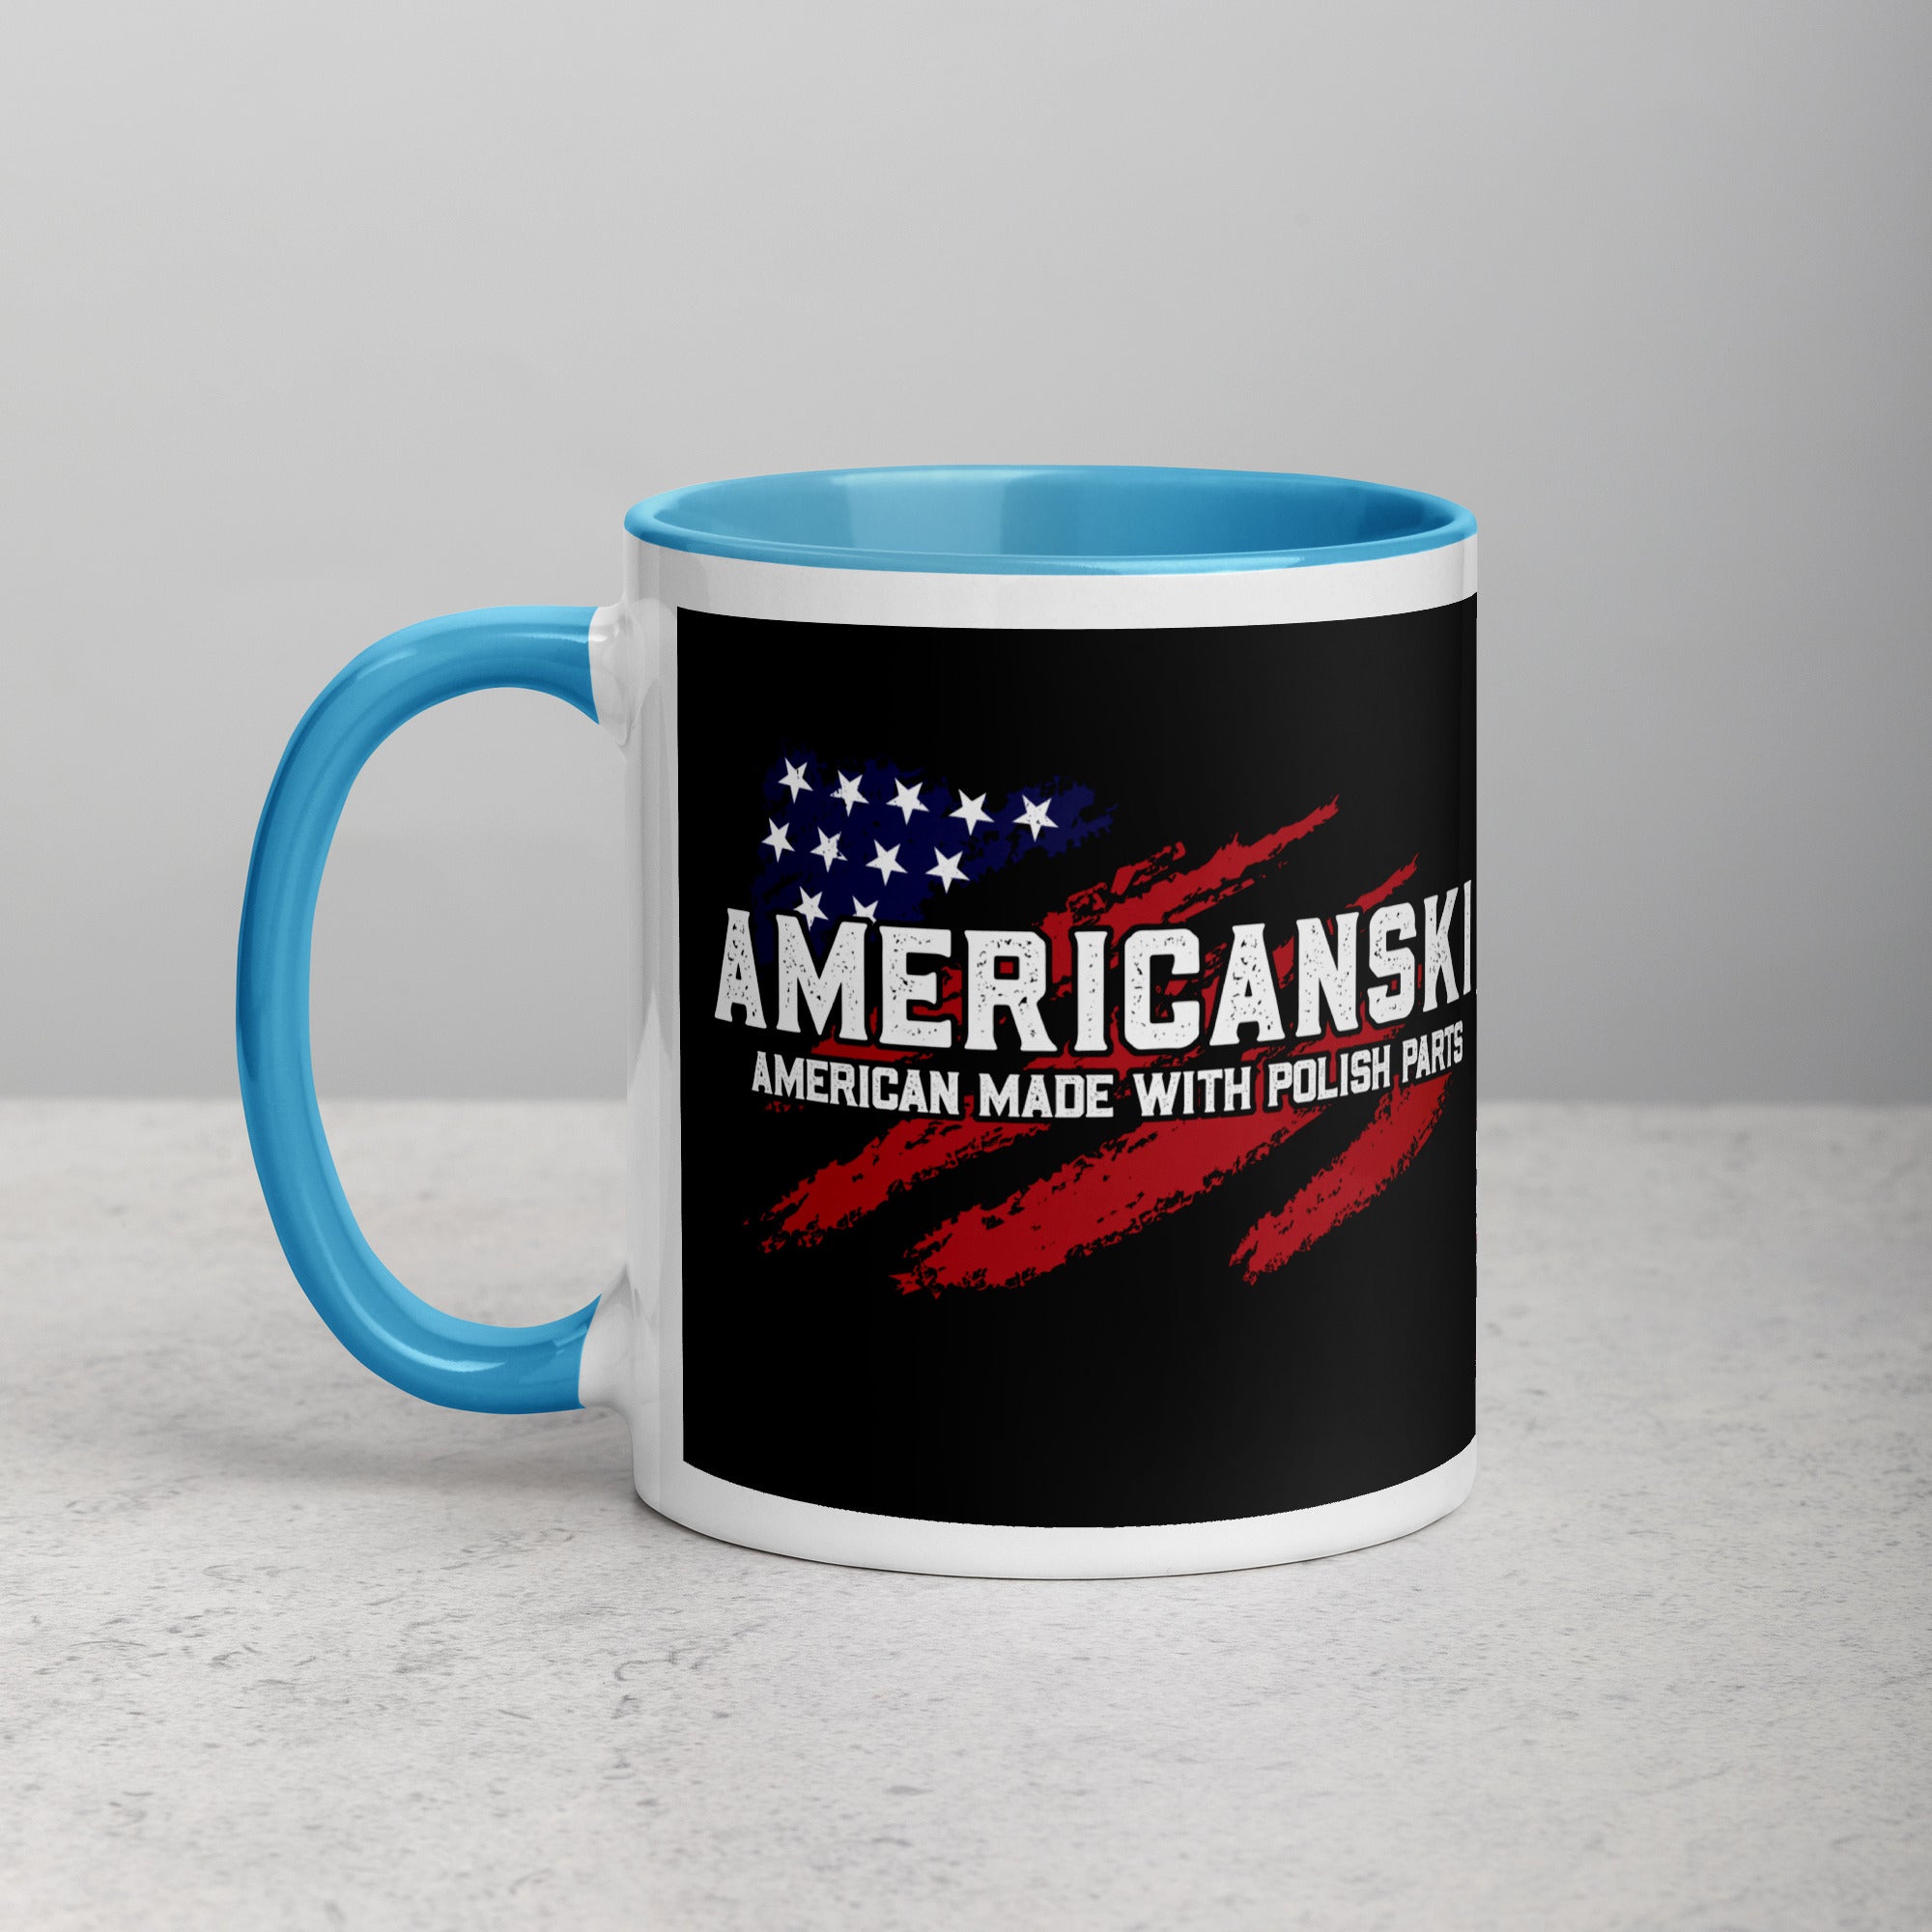 Americanski Coffee Mug with Color Inside  Polish Shirt Store Blue 11 oz 